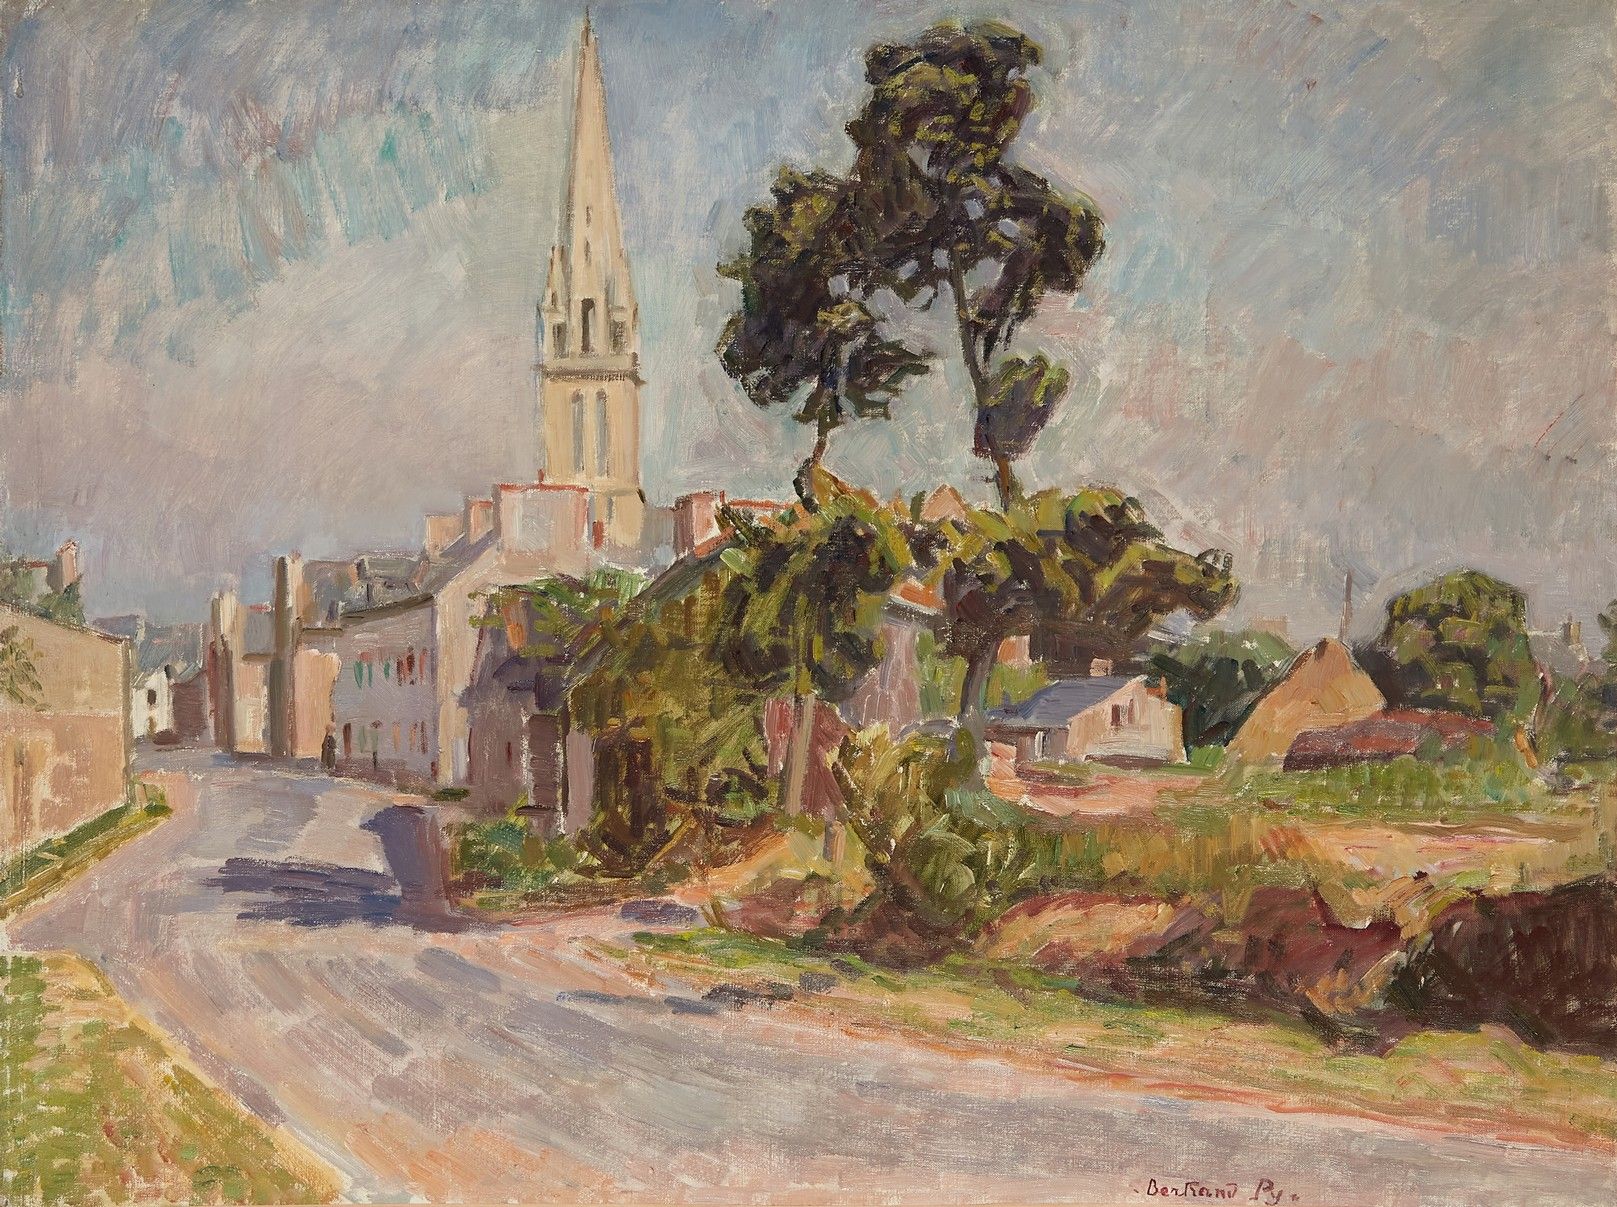 Bertrand py 伯特兰-PY（1895-1973年）

村里的钟楼

布面油画，右下角有签名 

80 x 60厘米